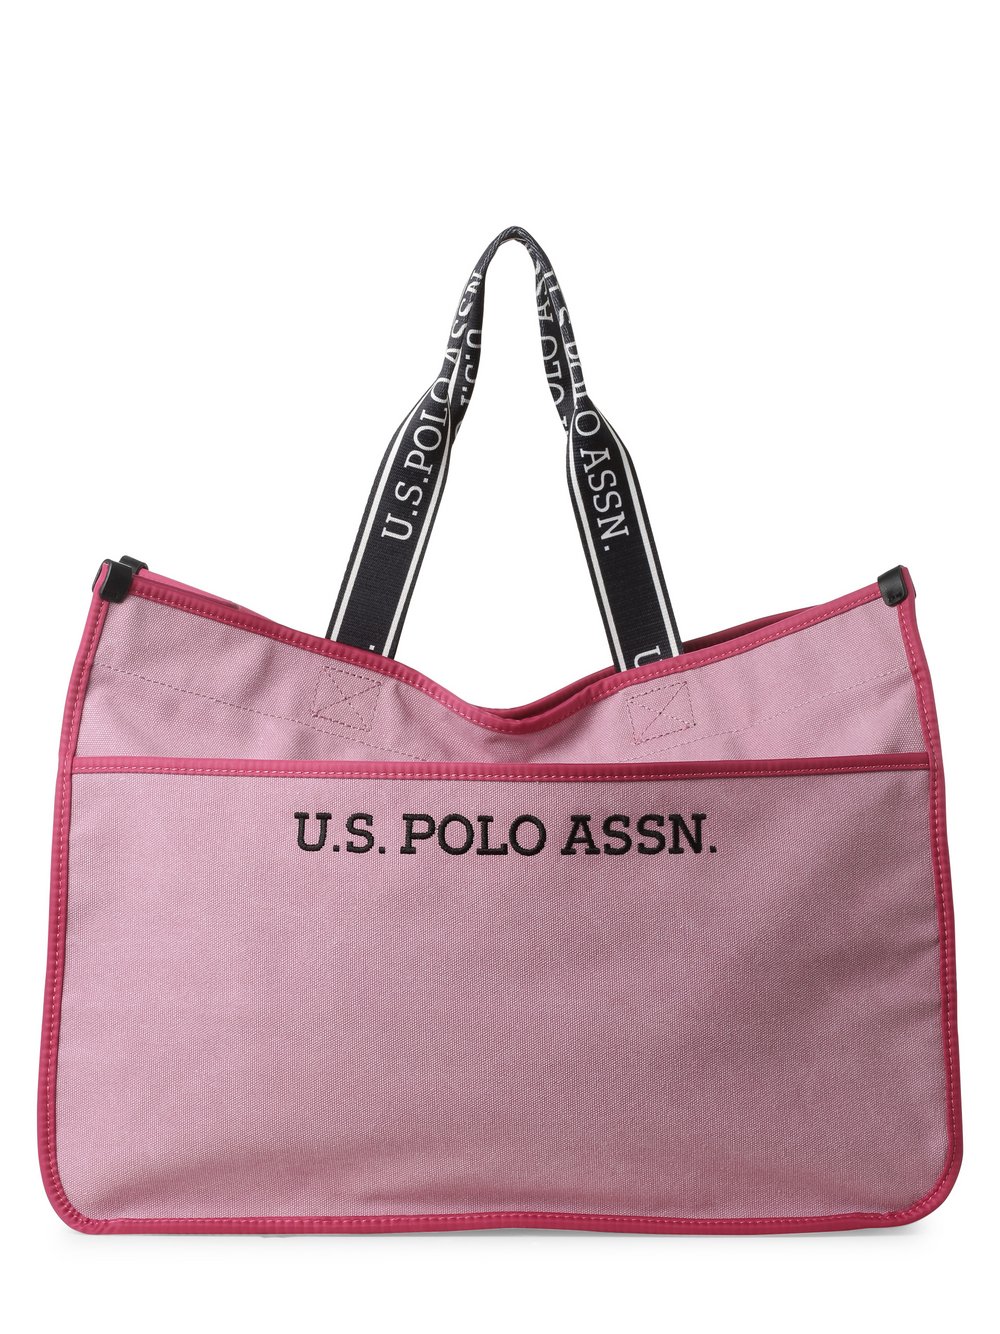 U.S. Polo Assn. - Damska torba shopper – Halifax, różowy